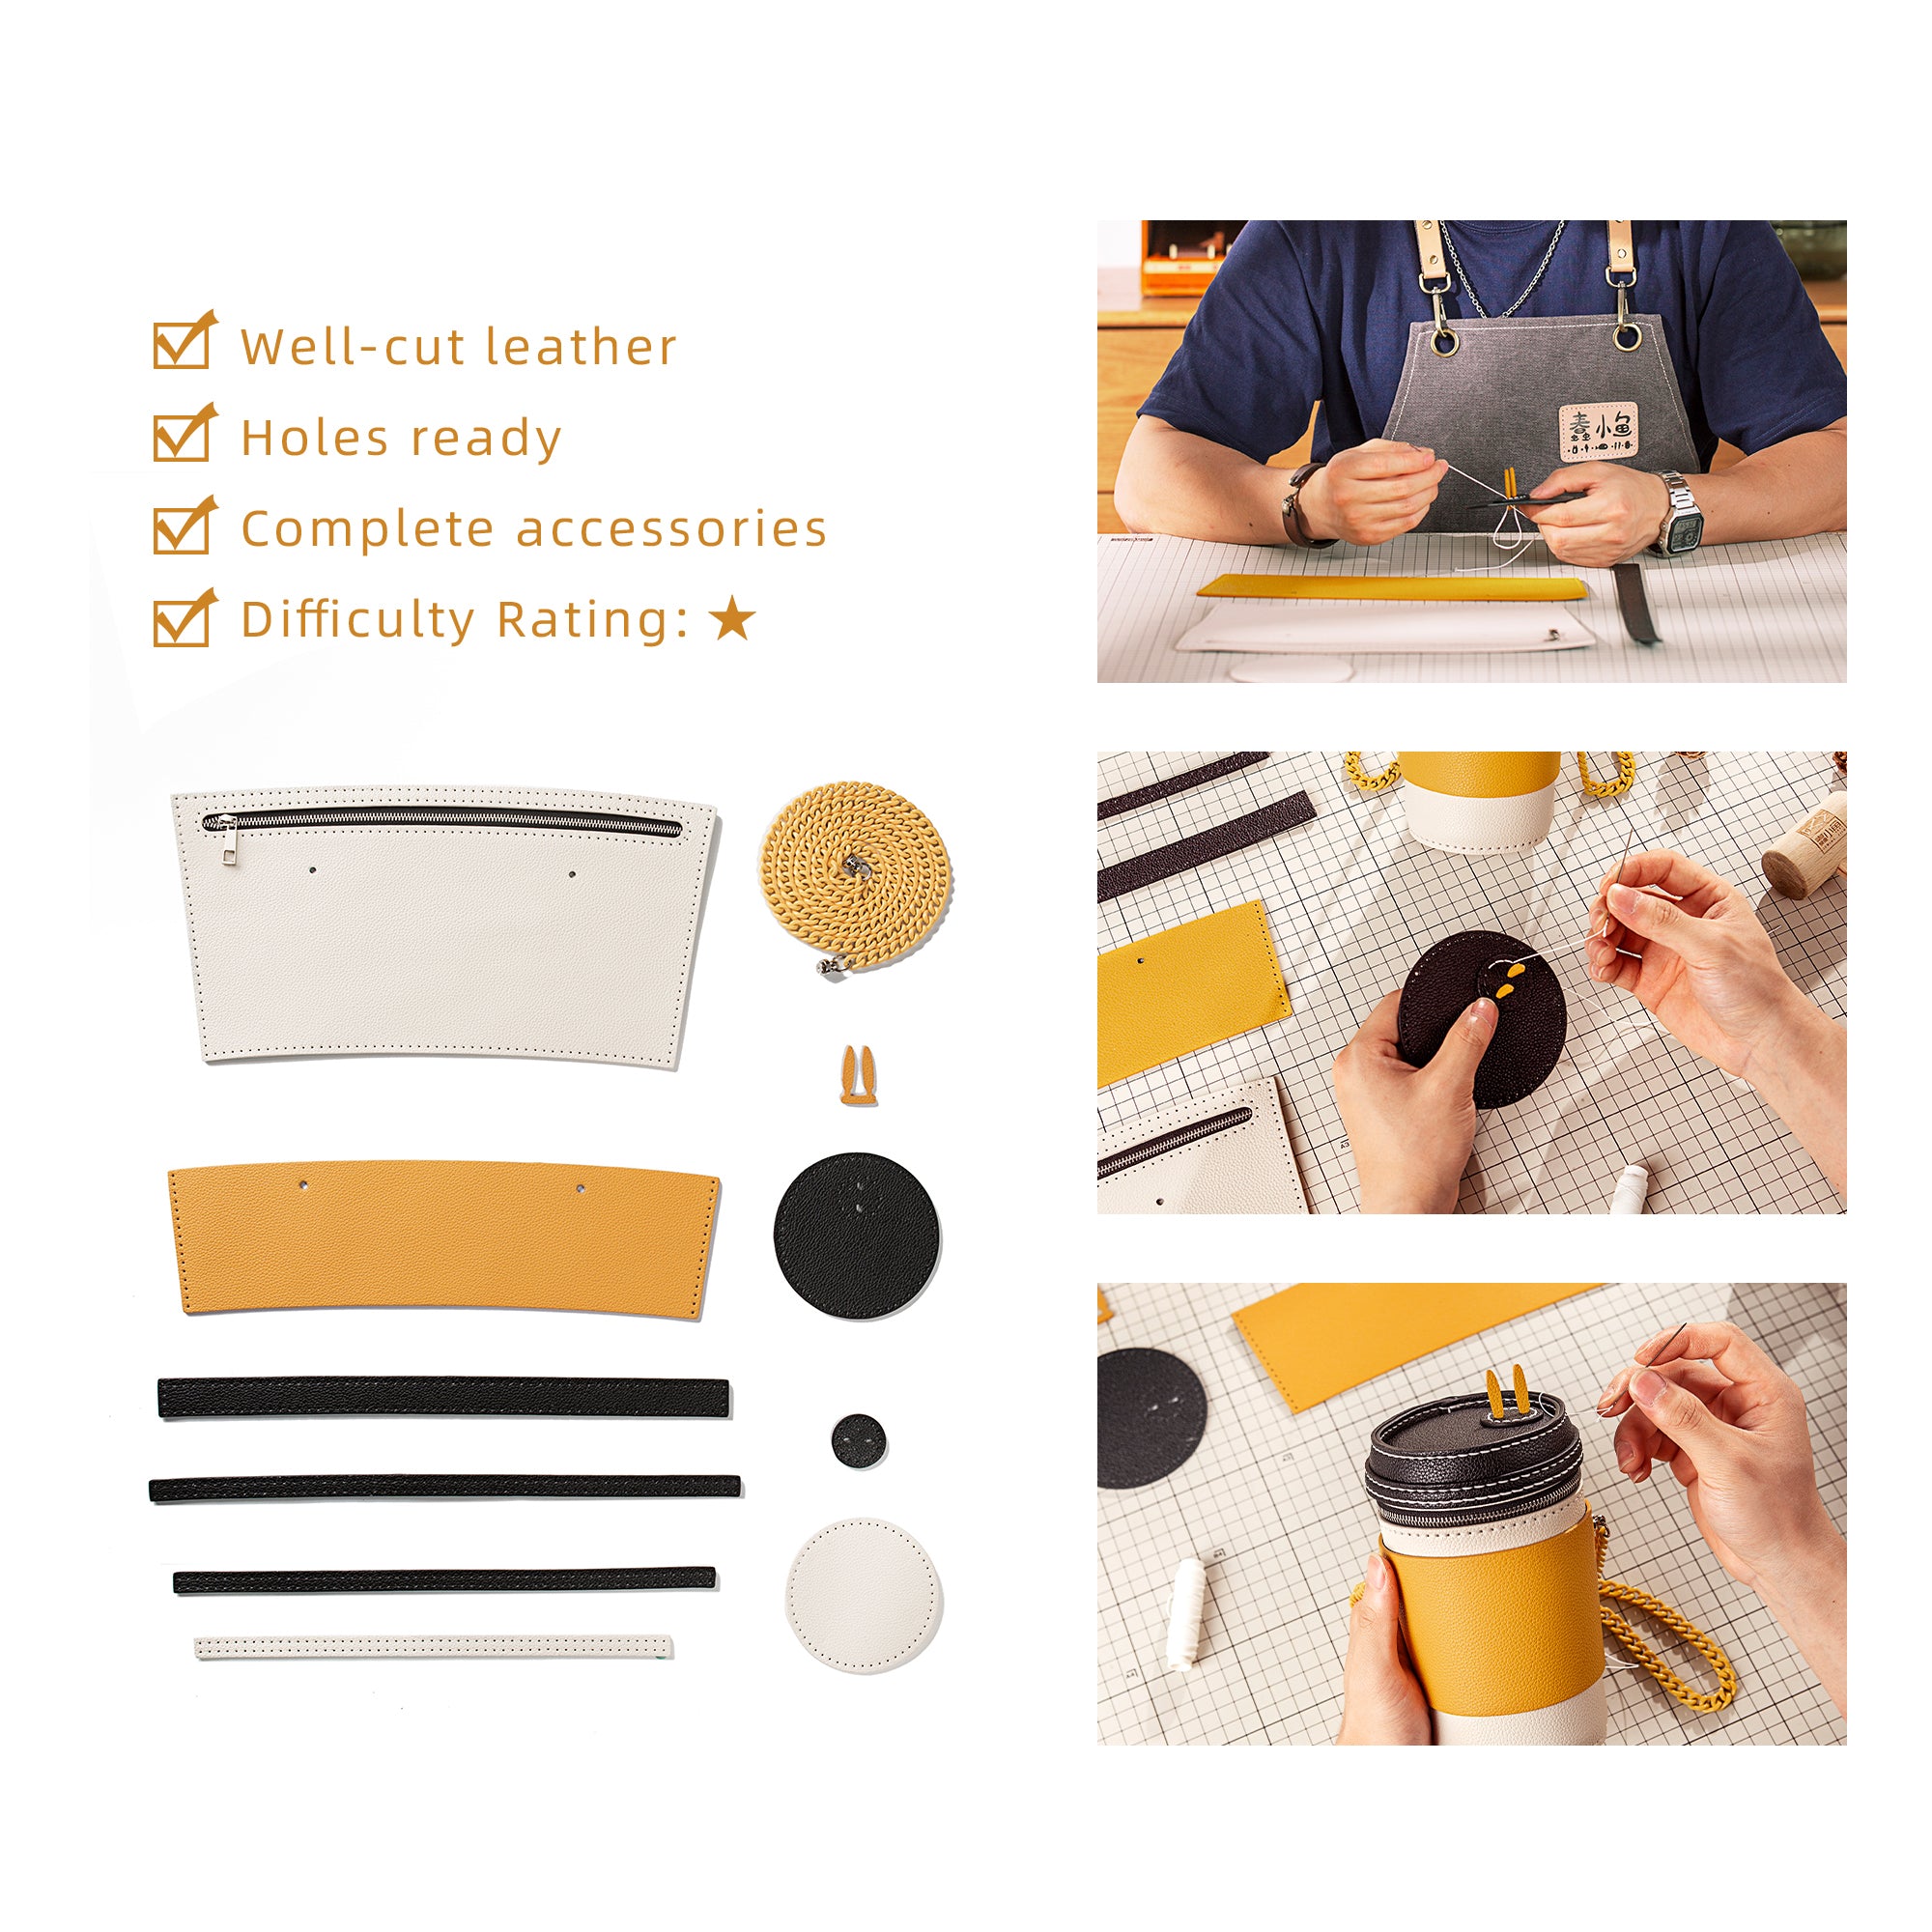 Creative Coffee Cup Leather Bag Kit